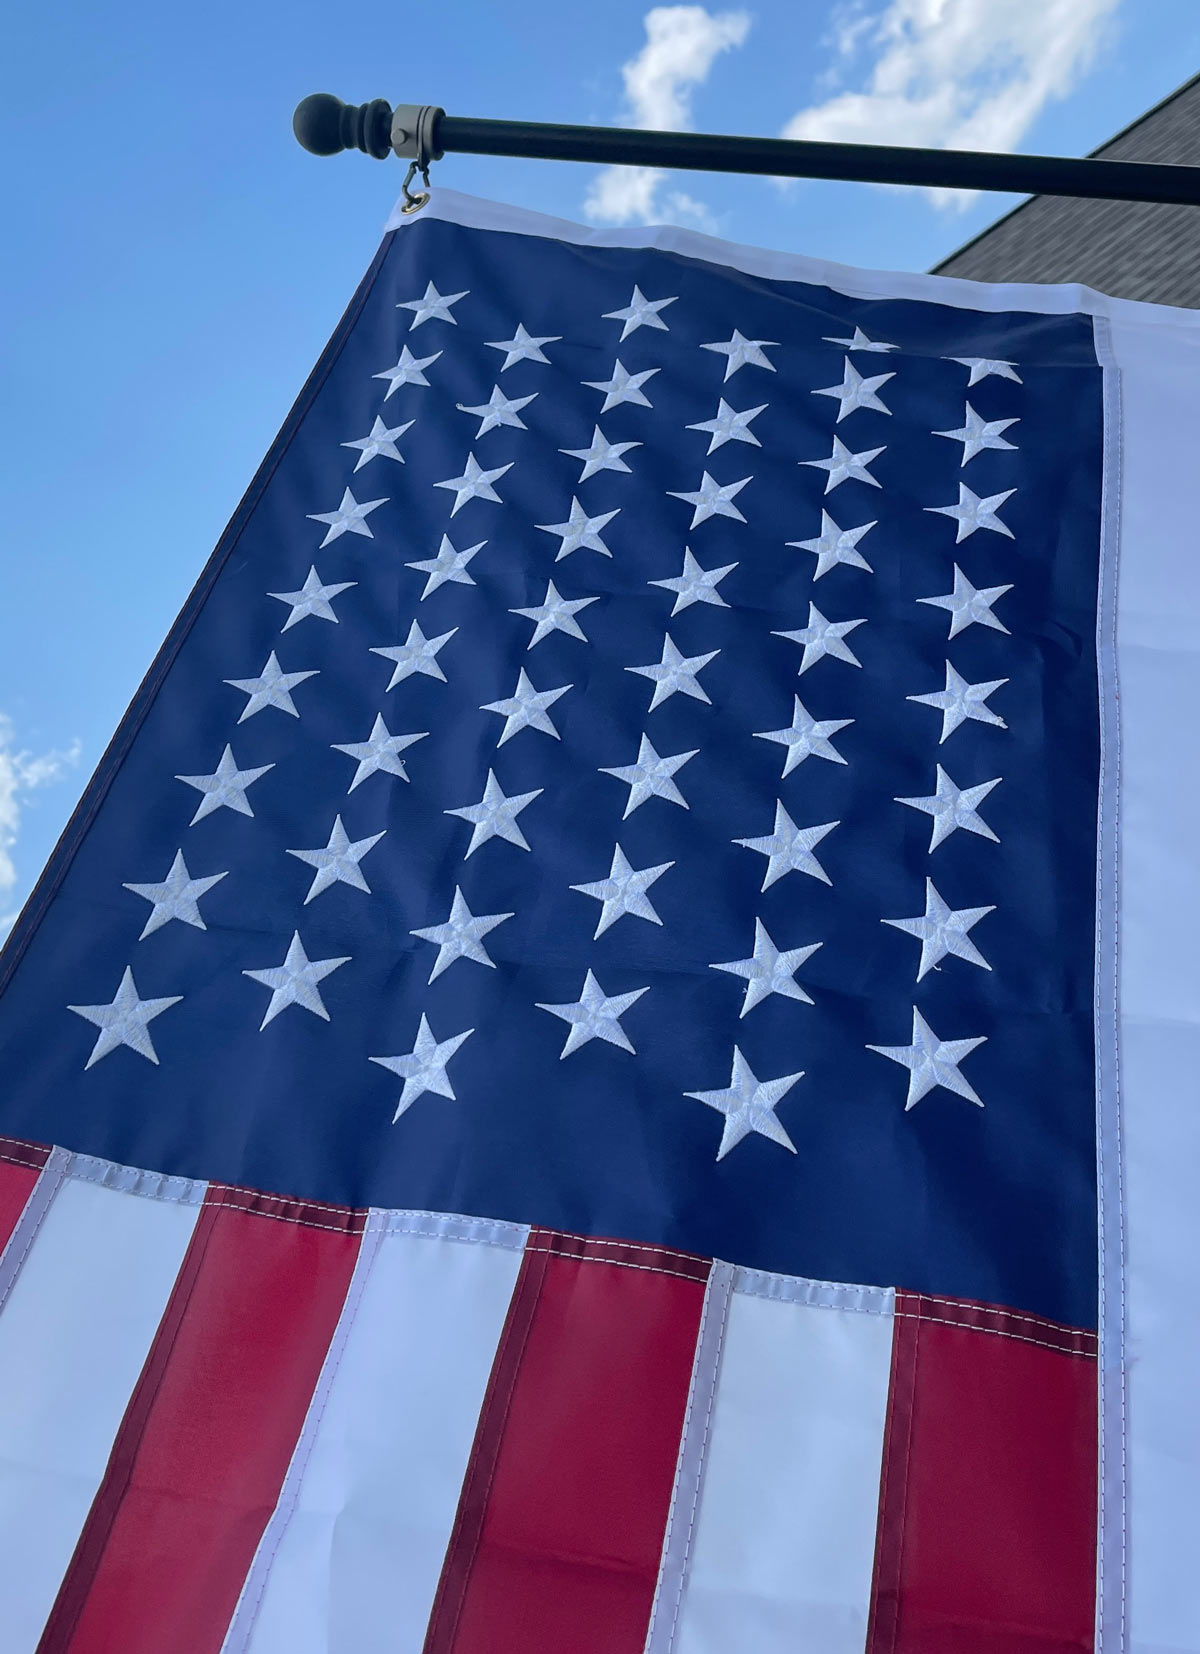 Jumbo United States Flag Patch - Spiritus Systems